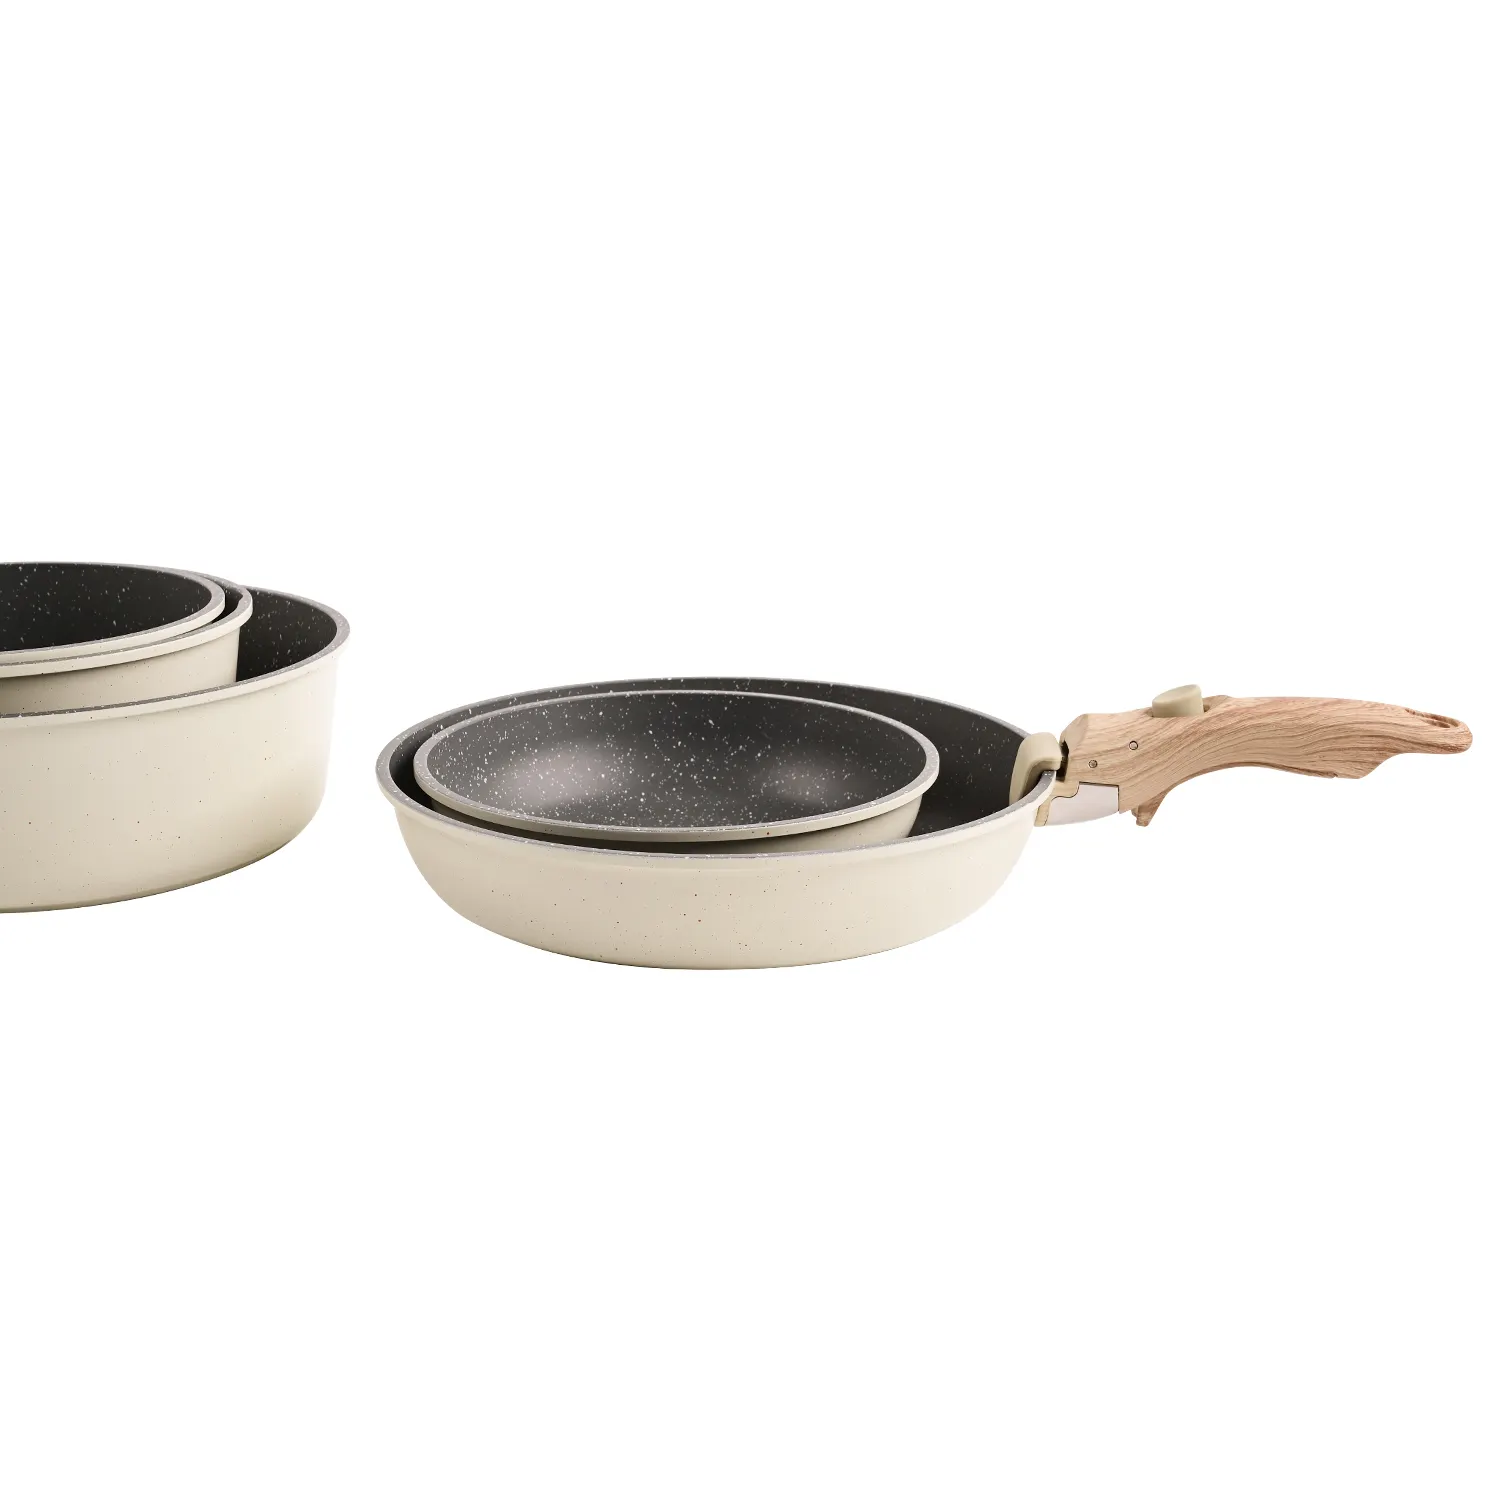 hot selling items all-purpose cookware sets detachable handle pots pans non-stick